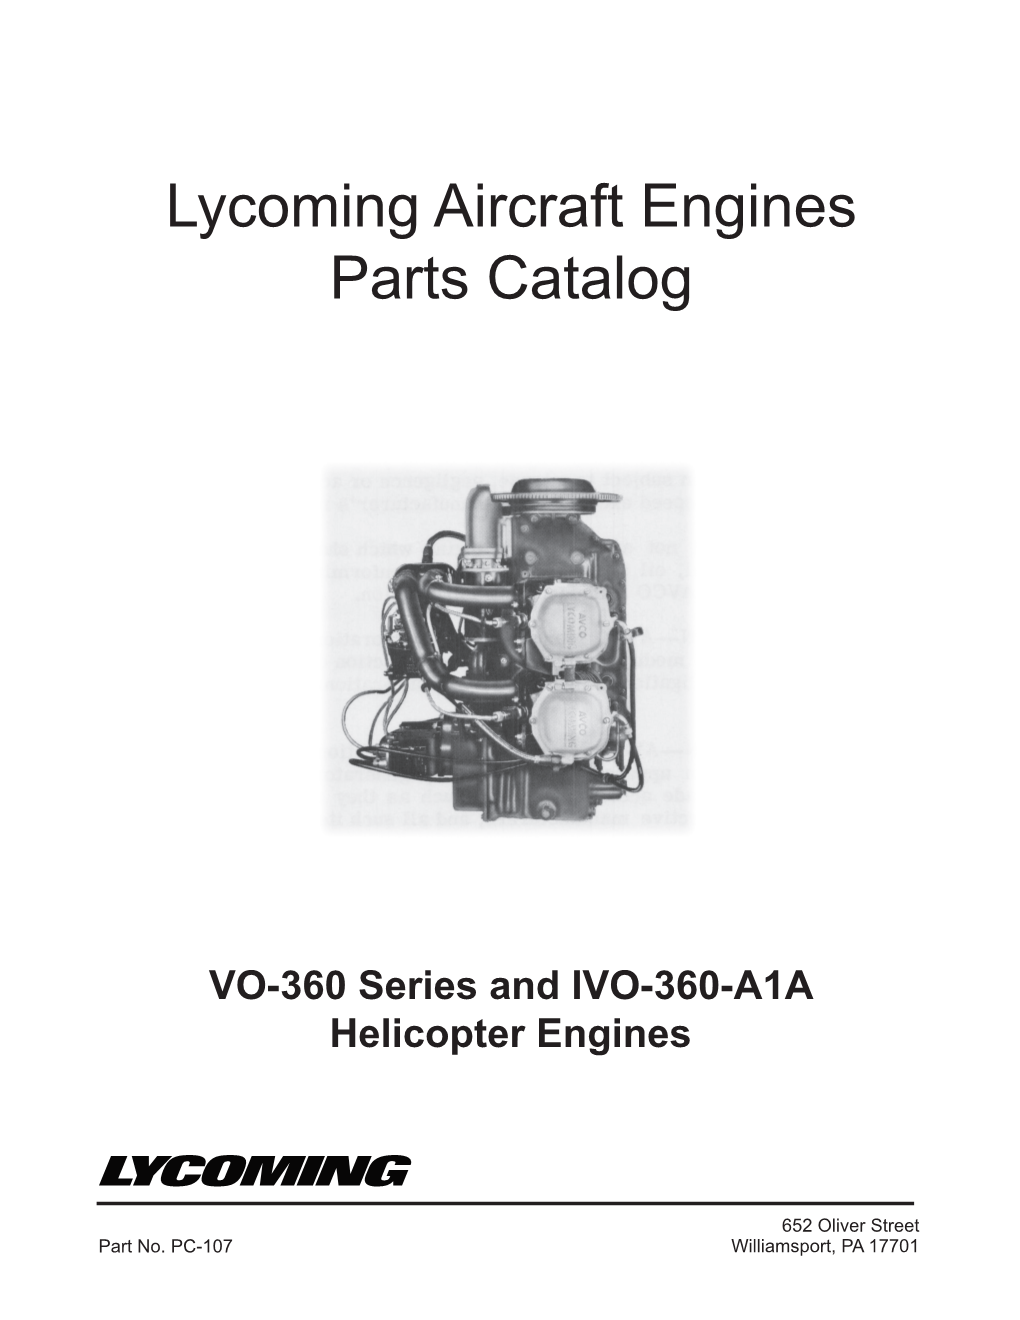 PC-107 Williamsport, PA 17701 Lycoming Aircraft Engines Parts Catalog